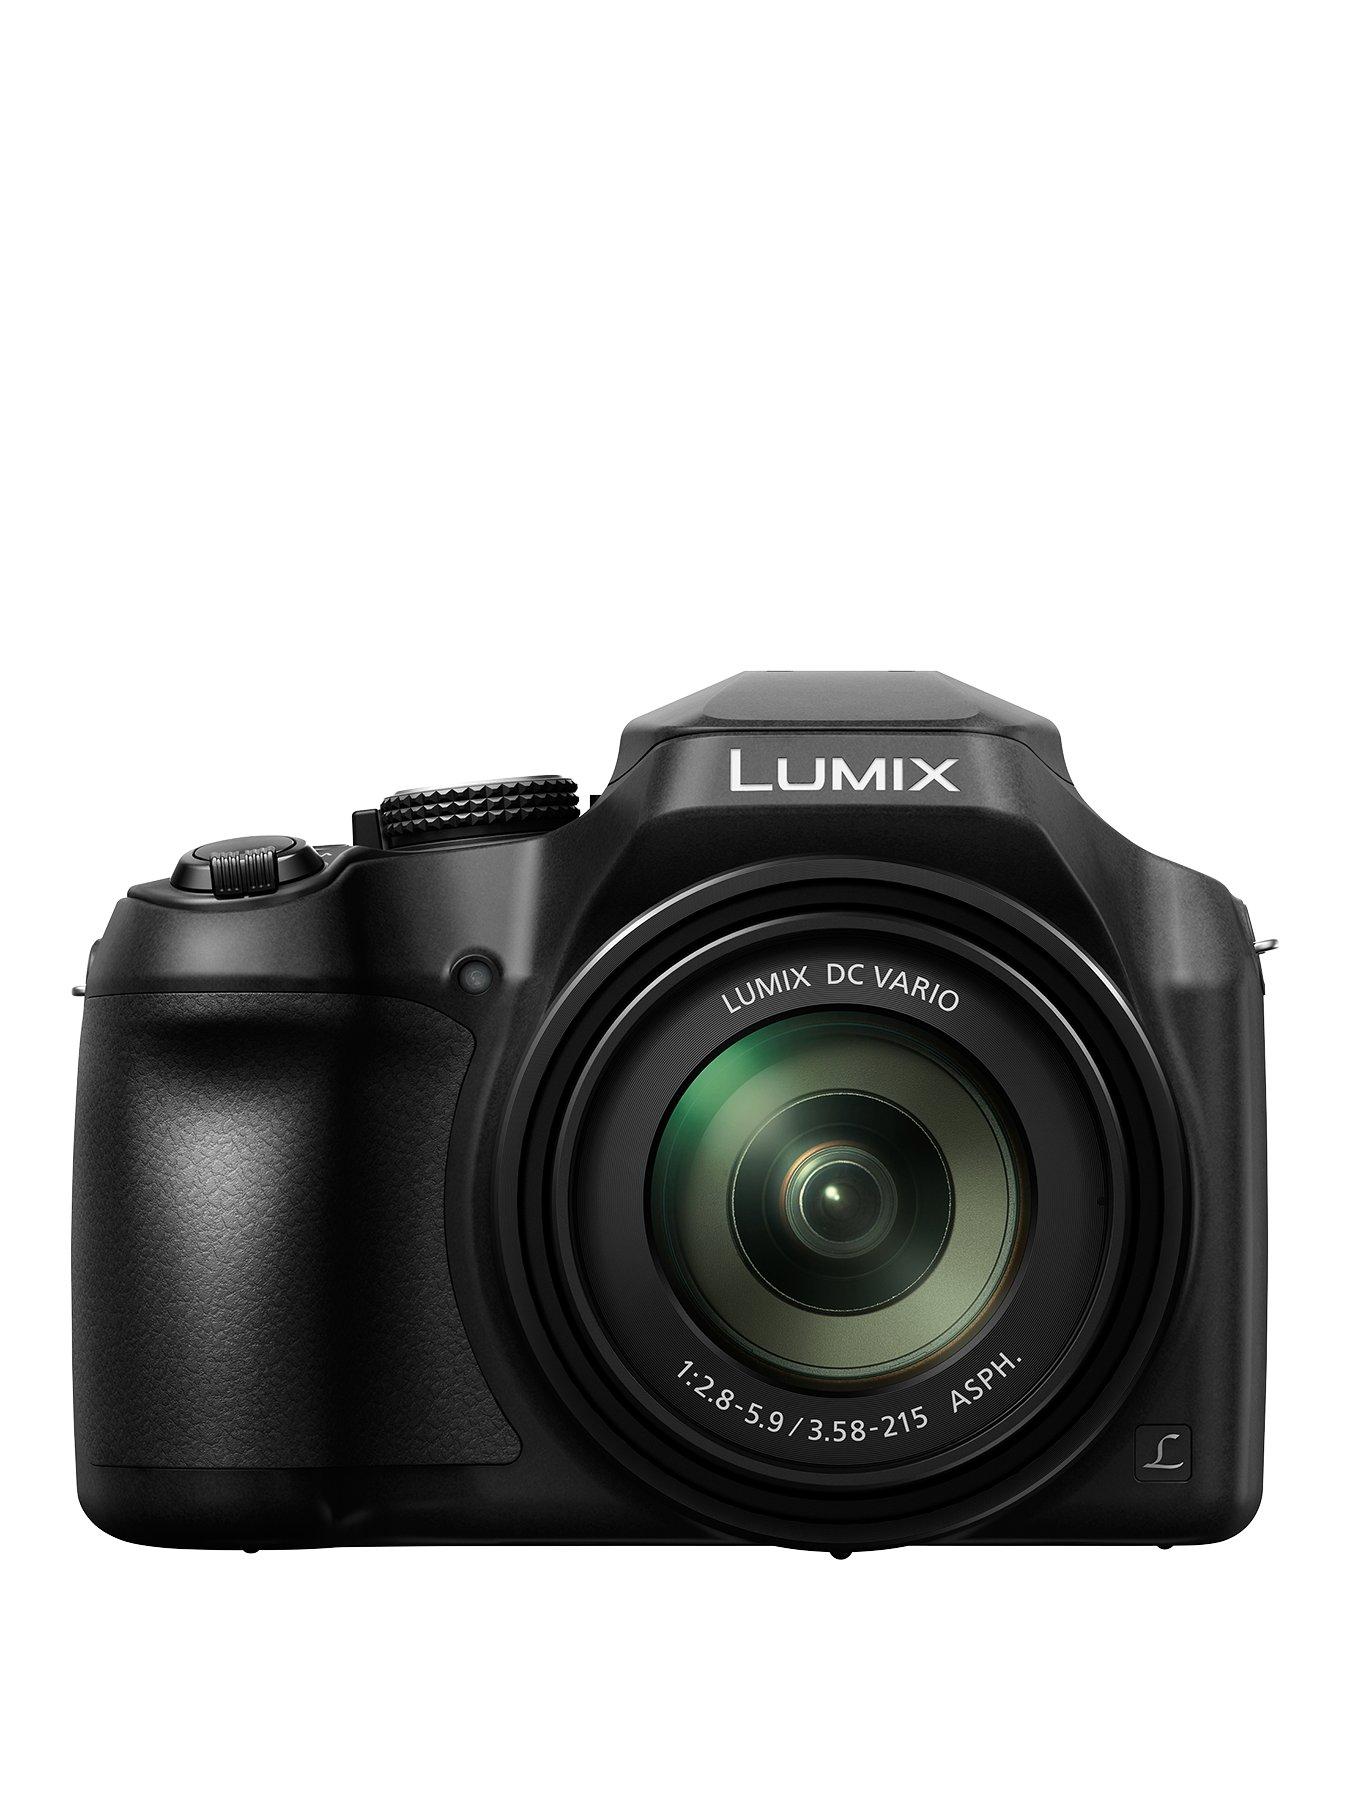 Panasonic Lumix Dmc-Fz82 18.1 Megapixel Camera – Black